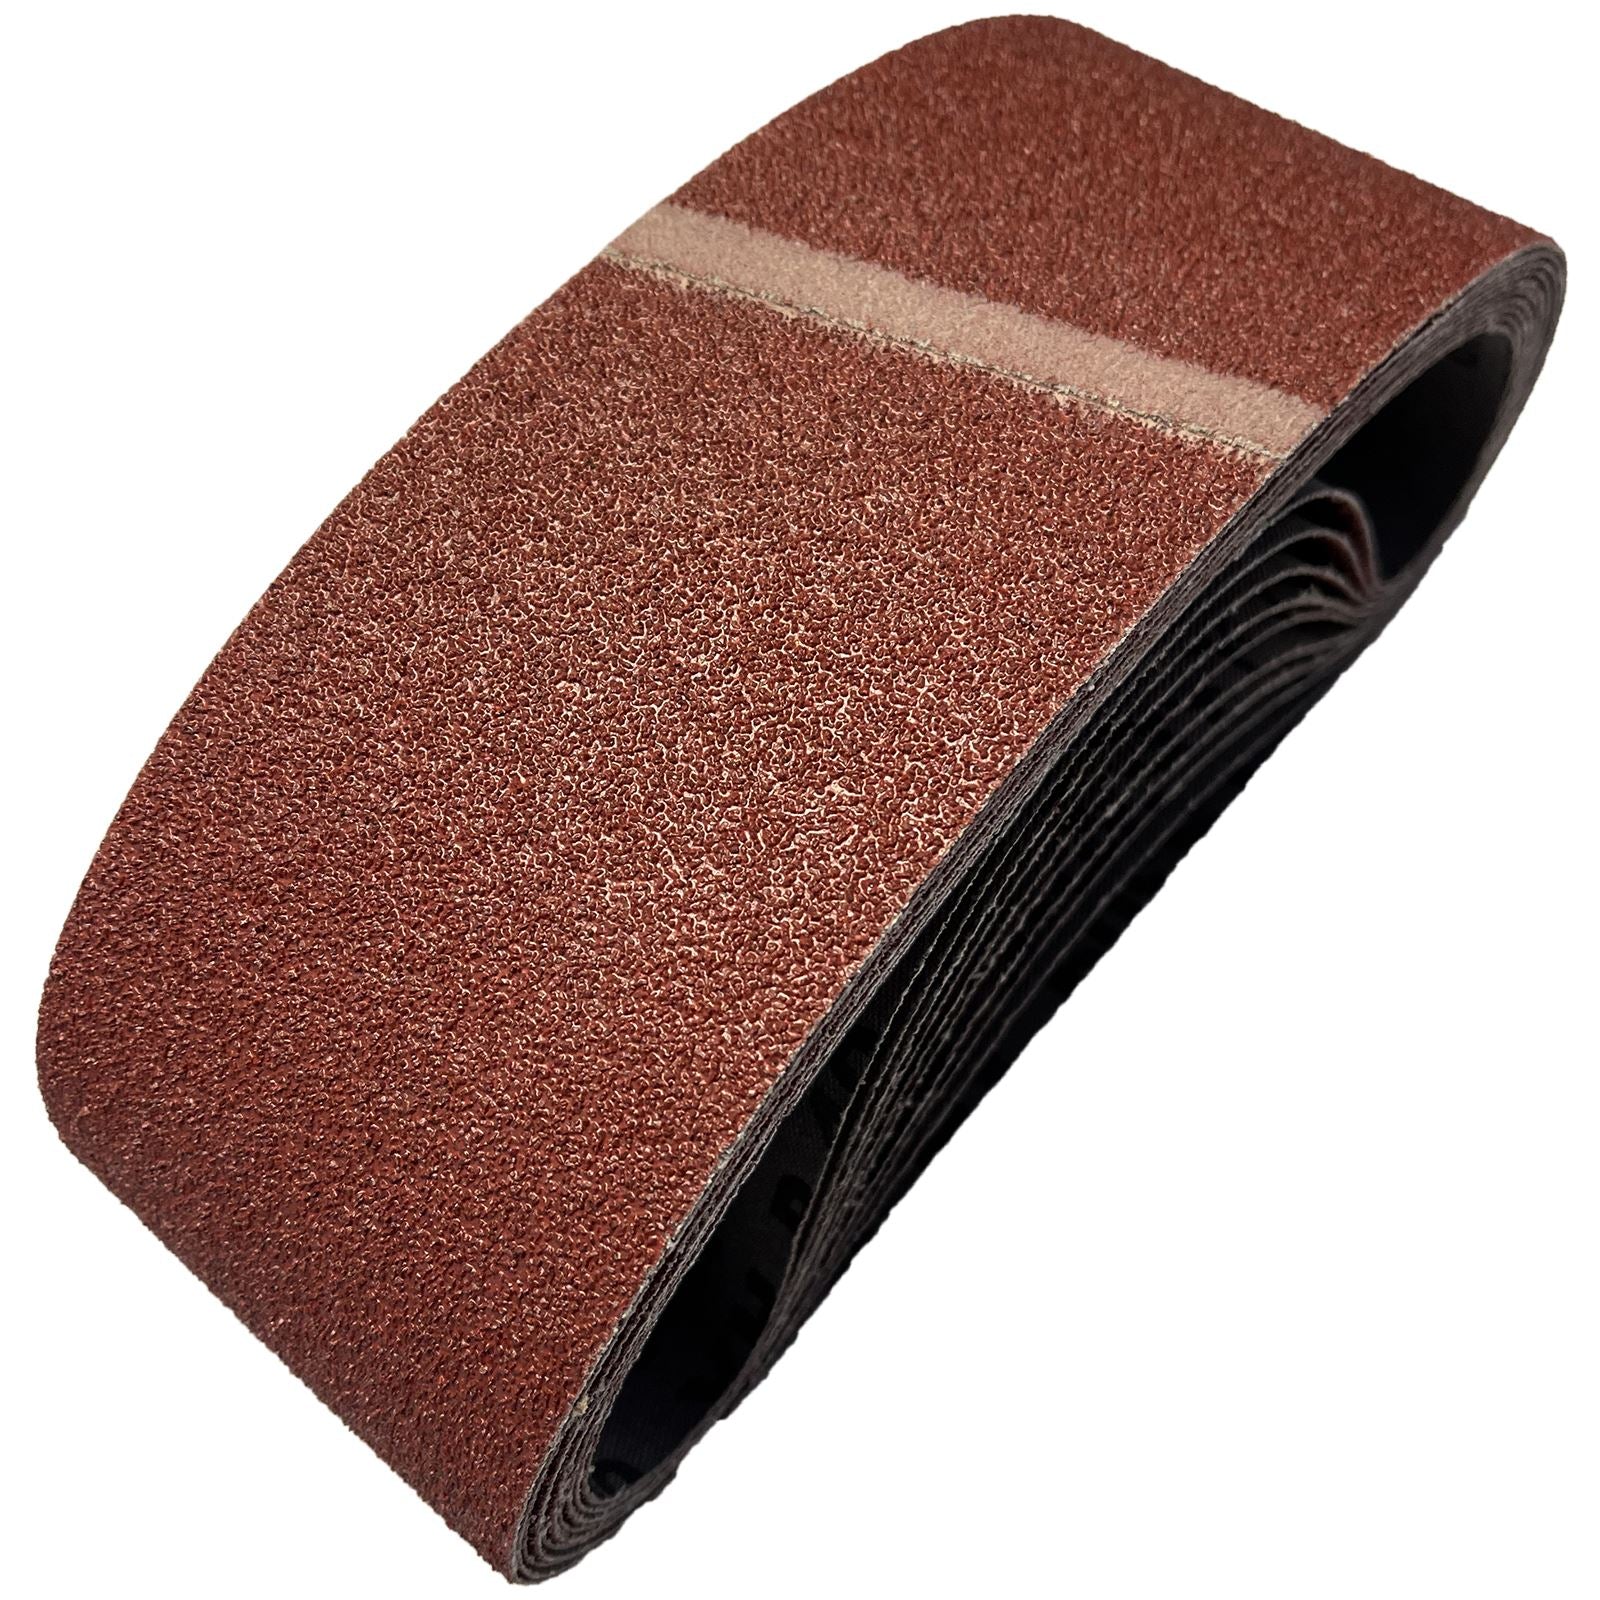 Klingspor Sanding Belts for Belt Sanders 75 x 533mm LS309XH